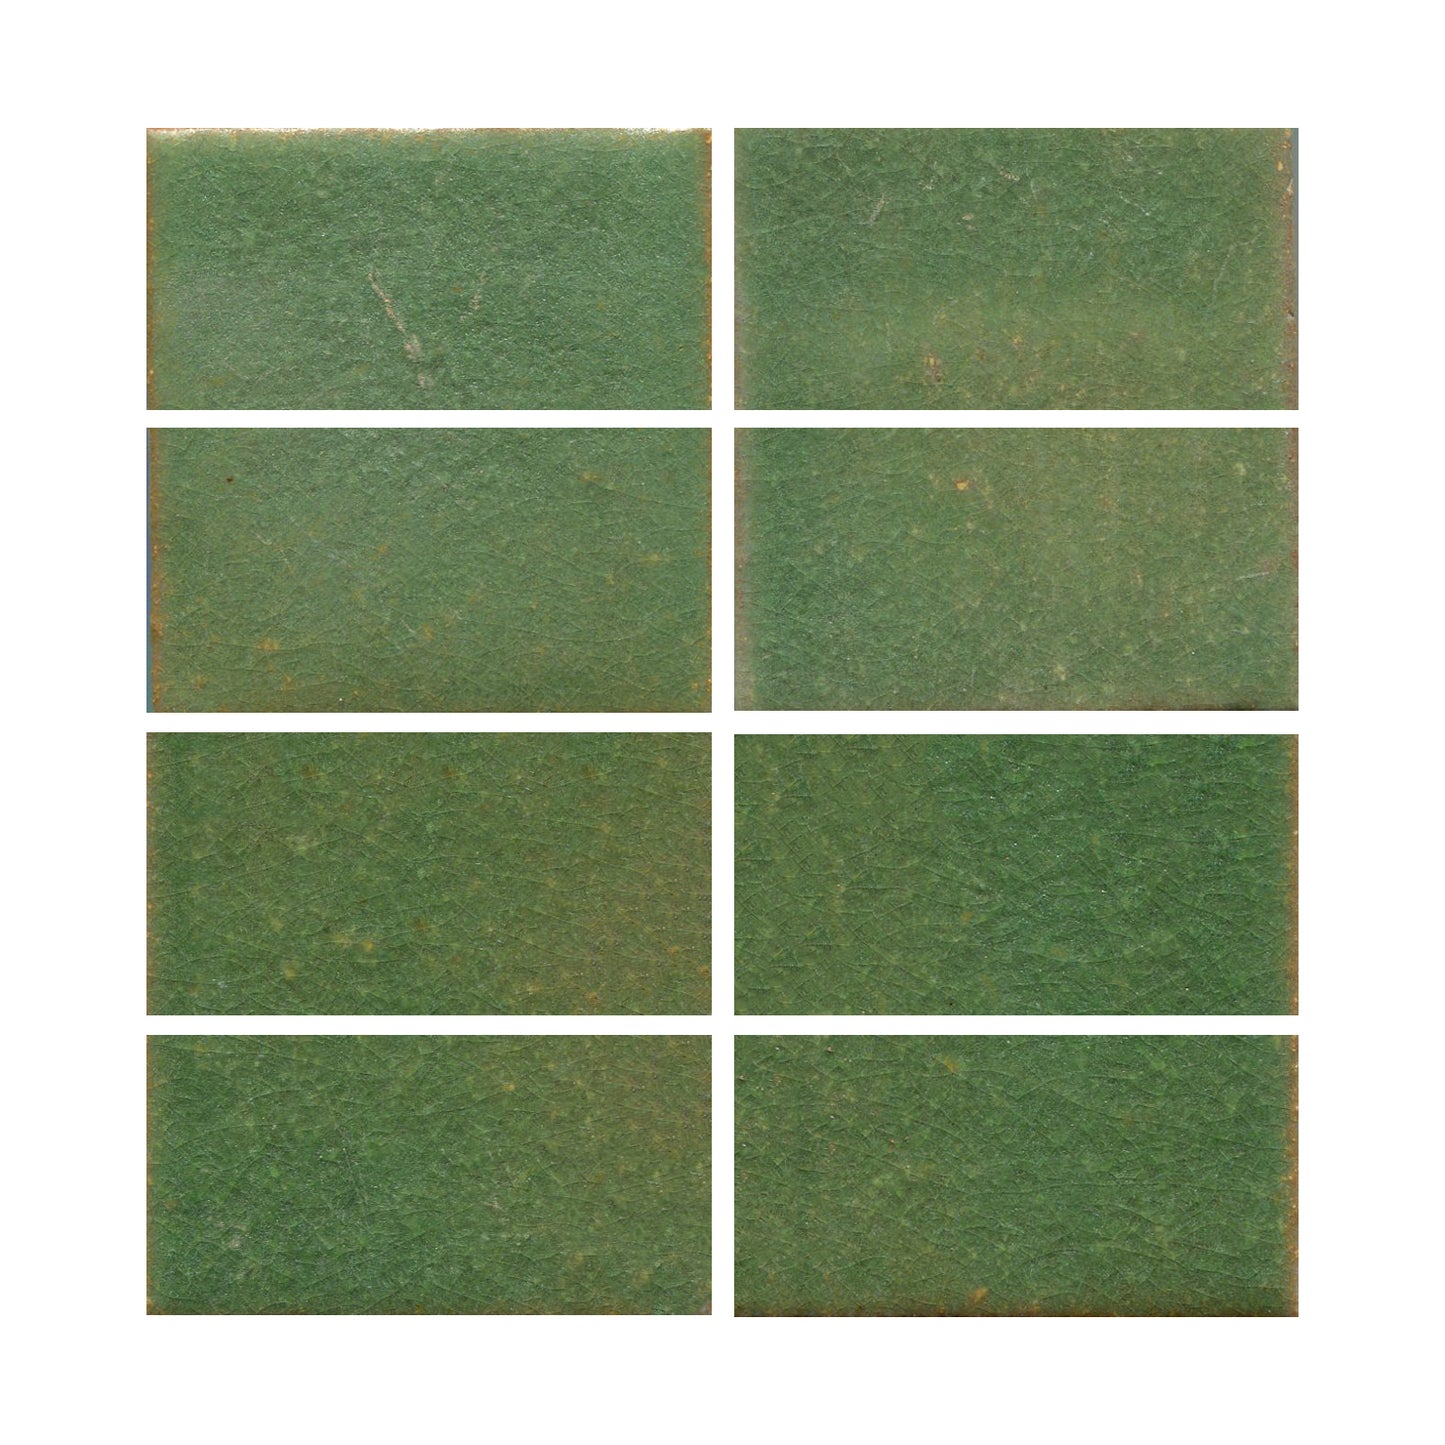 Avocado green 2x4 field tile